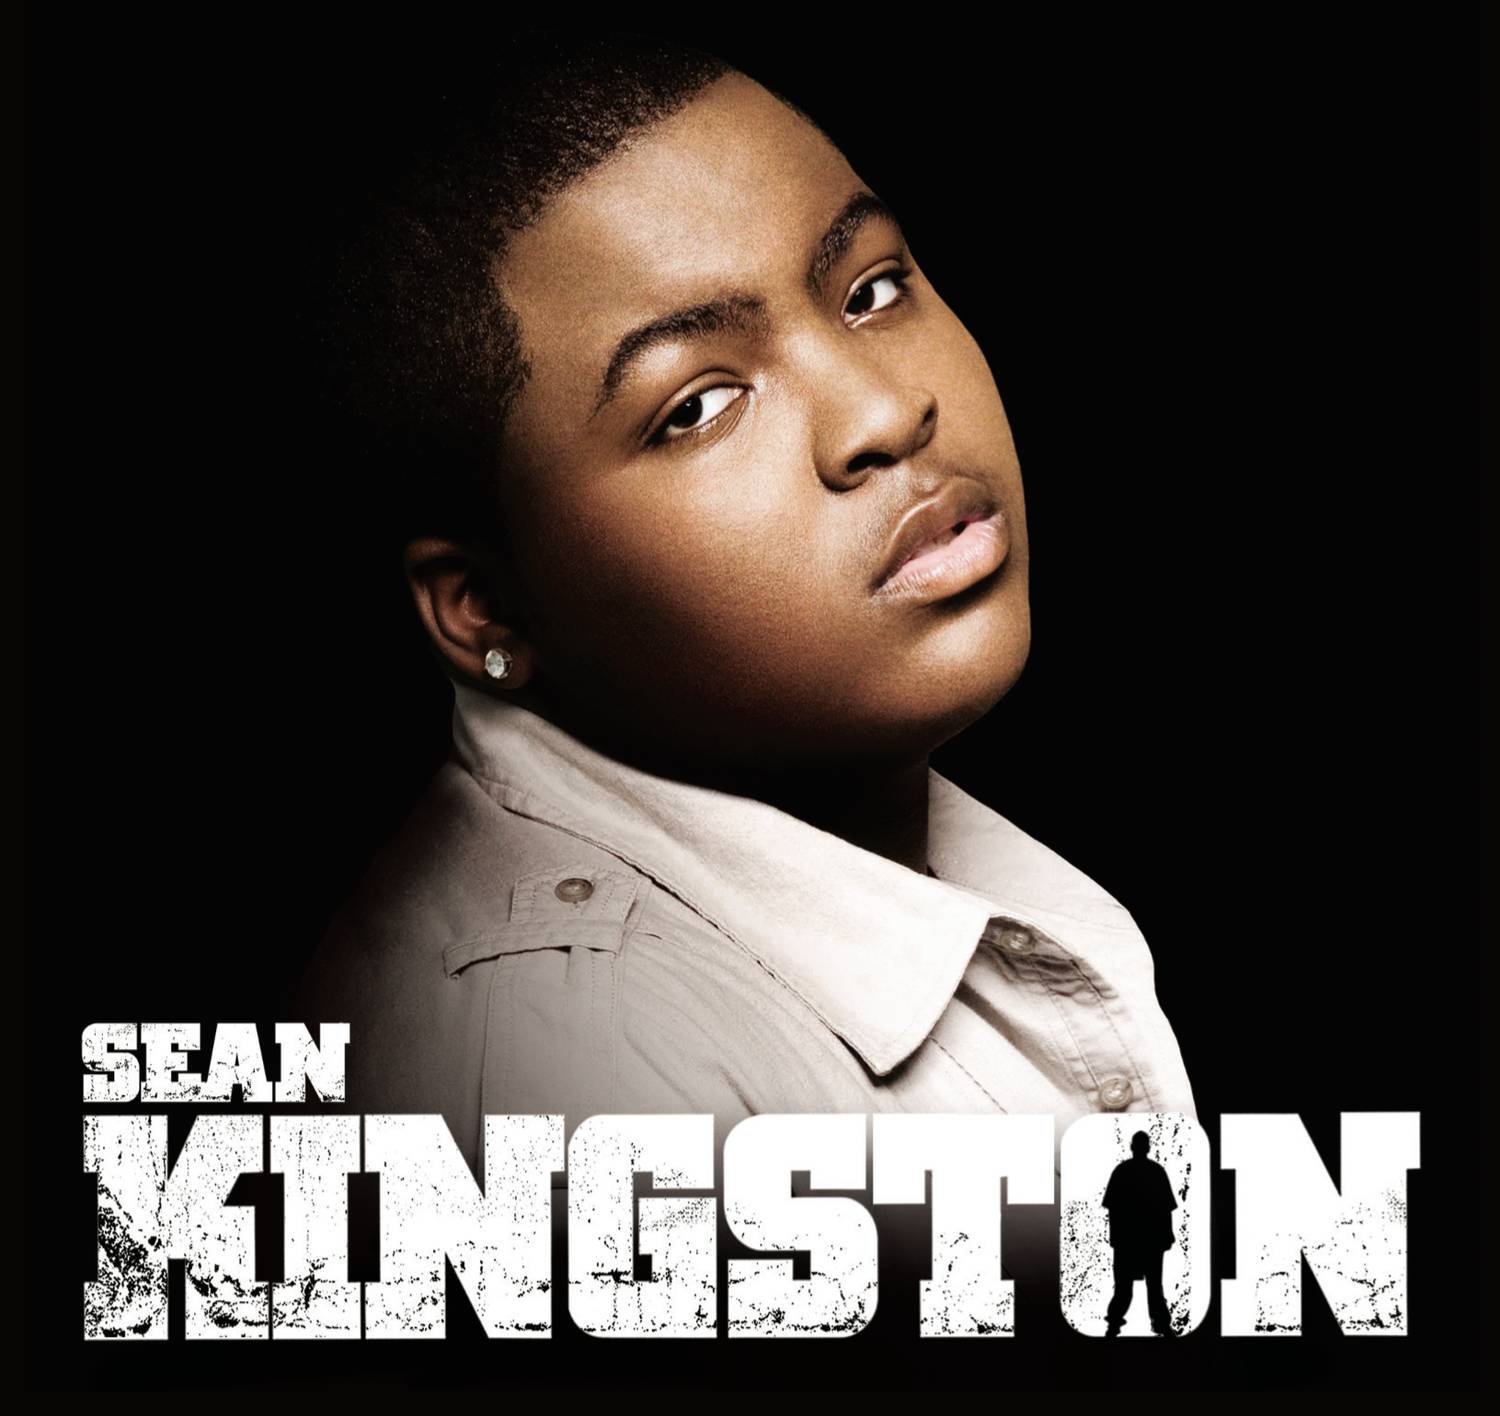 Sean Kingston - Can You Feel It